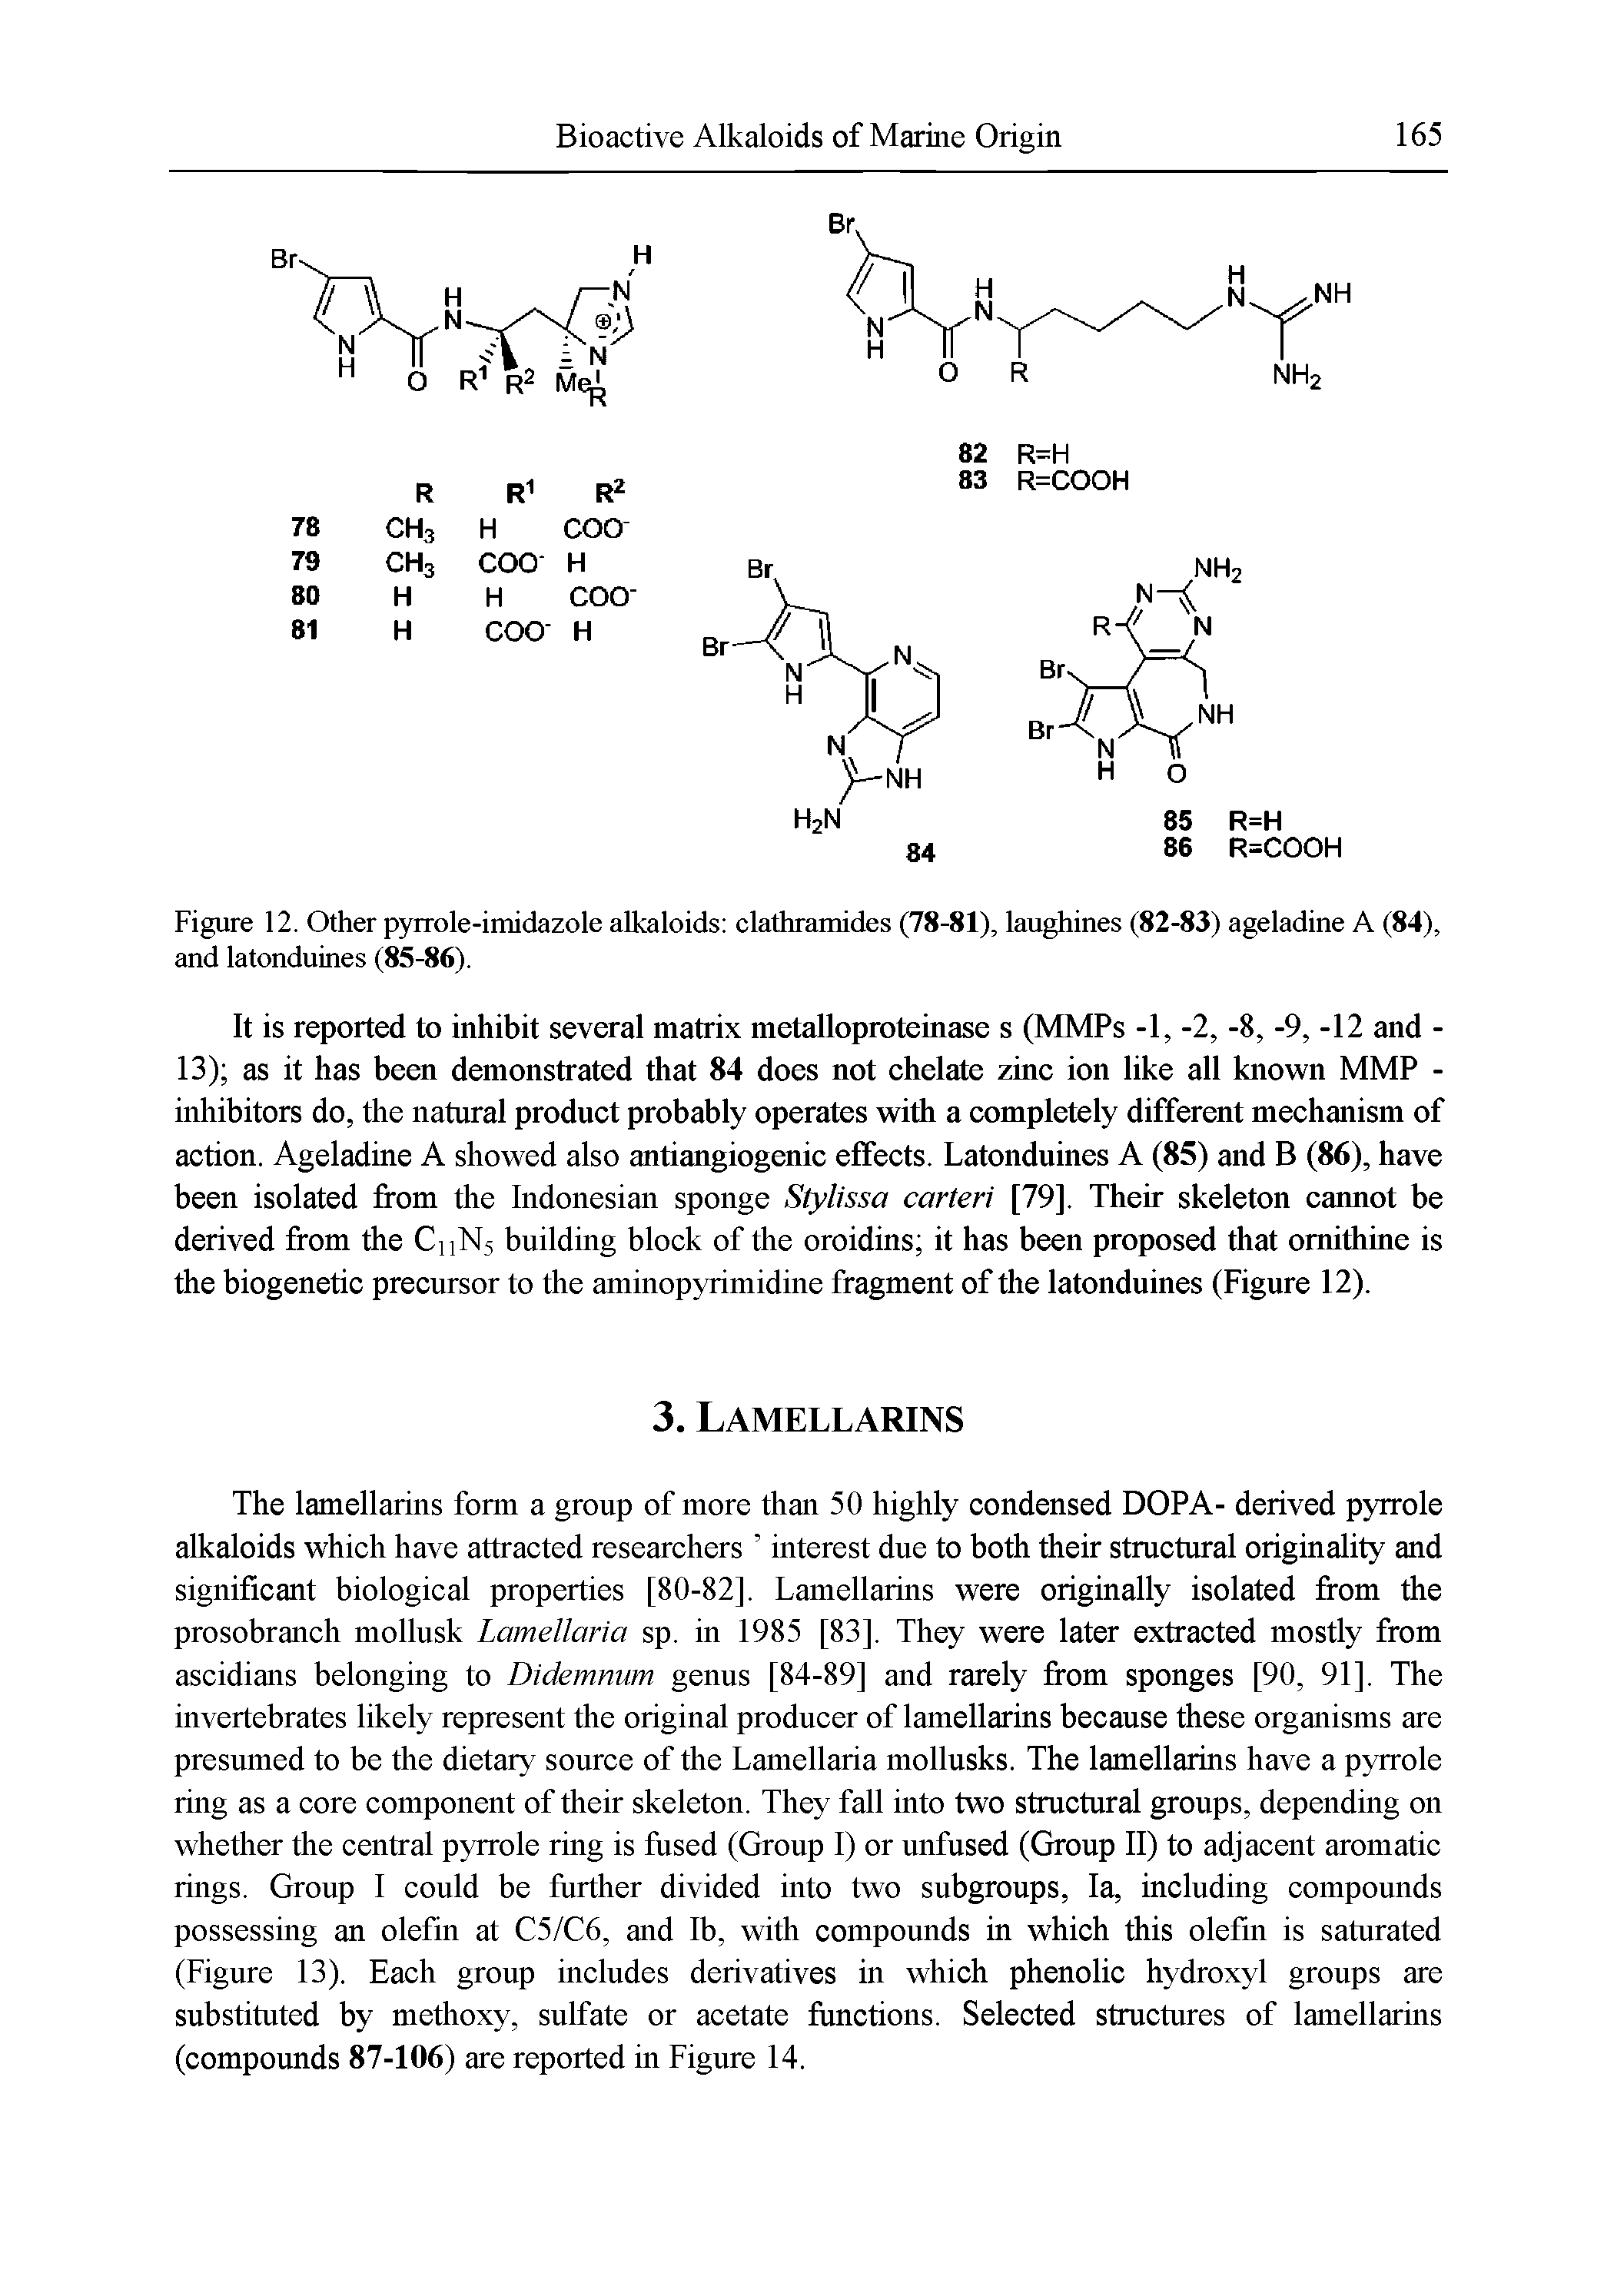 Figure 12. Other pyrrole-imidazole alkaloids clathramides (78-81), laughines (82-83) ageladine A (84), and latonduines (85-86).